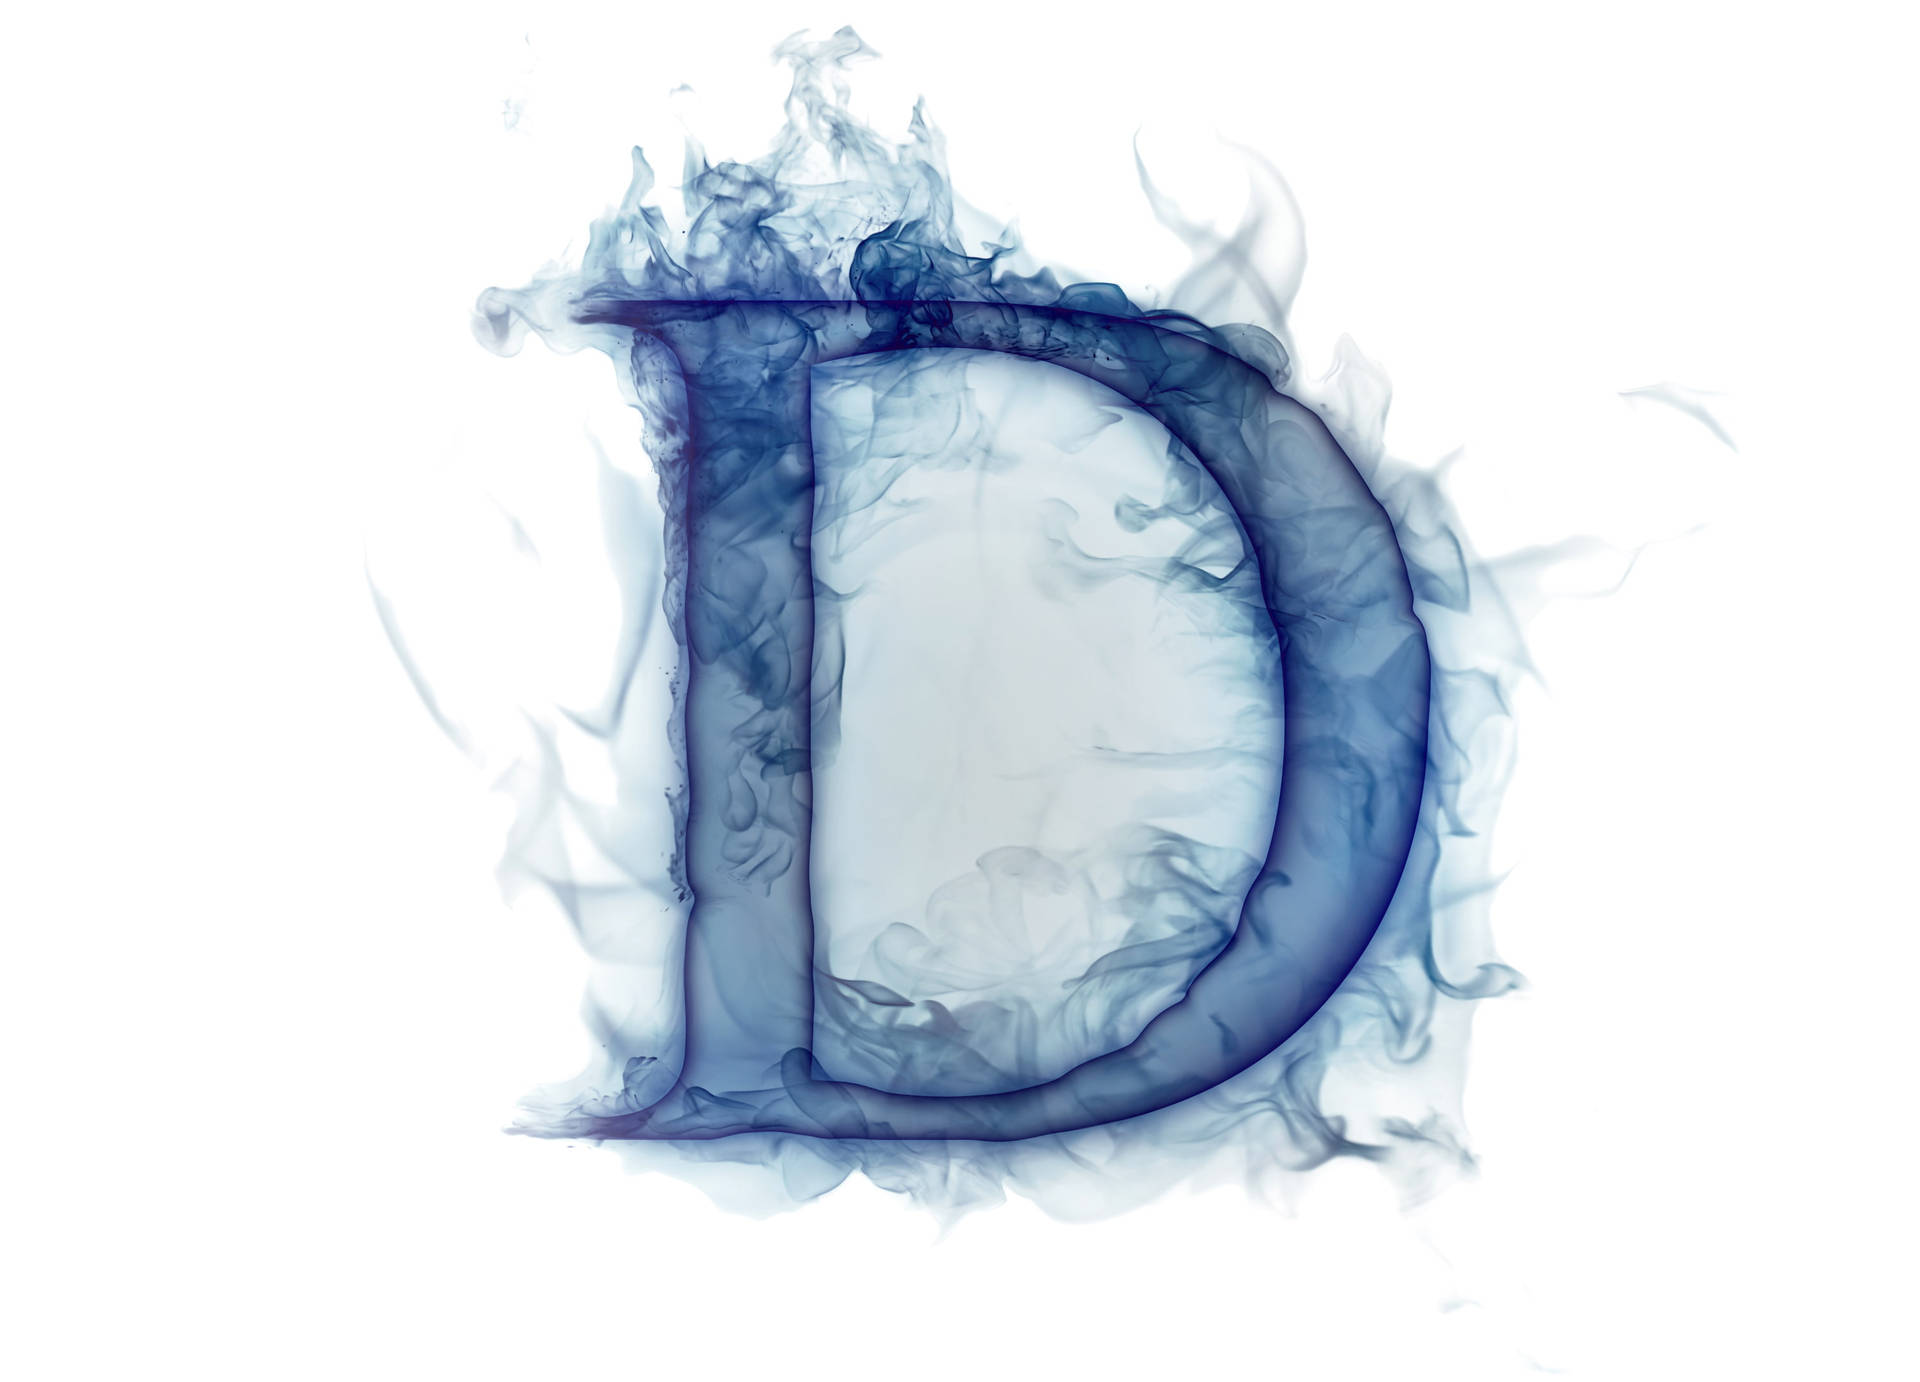 Burning Blue Capital Letter D Background